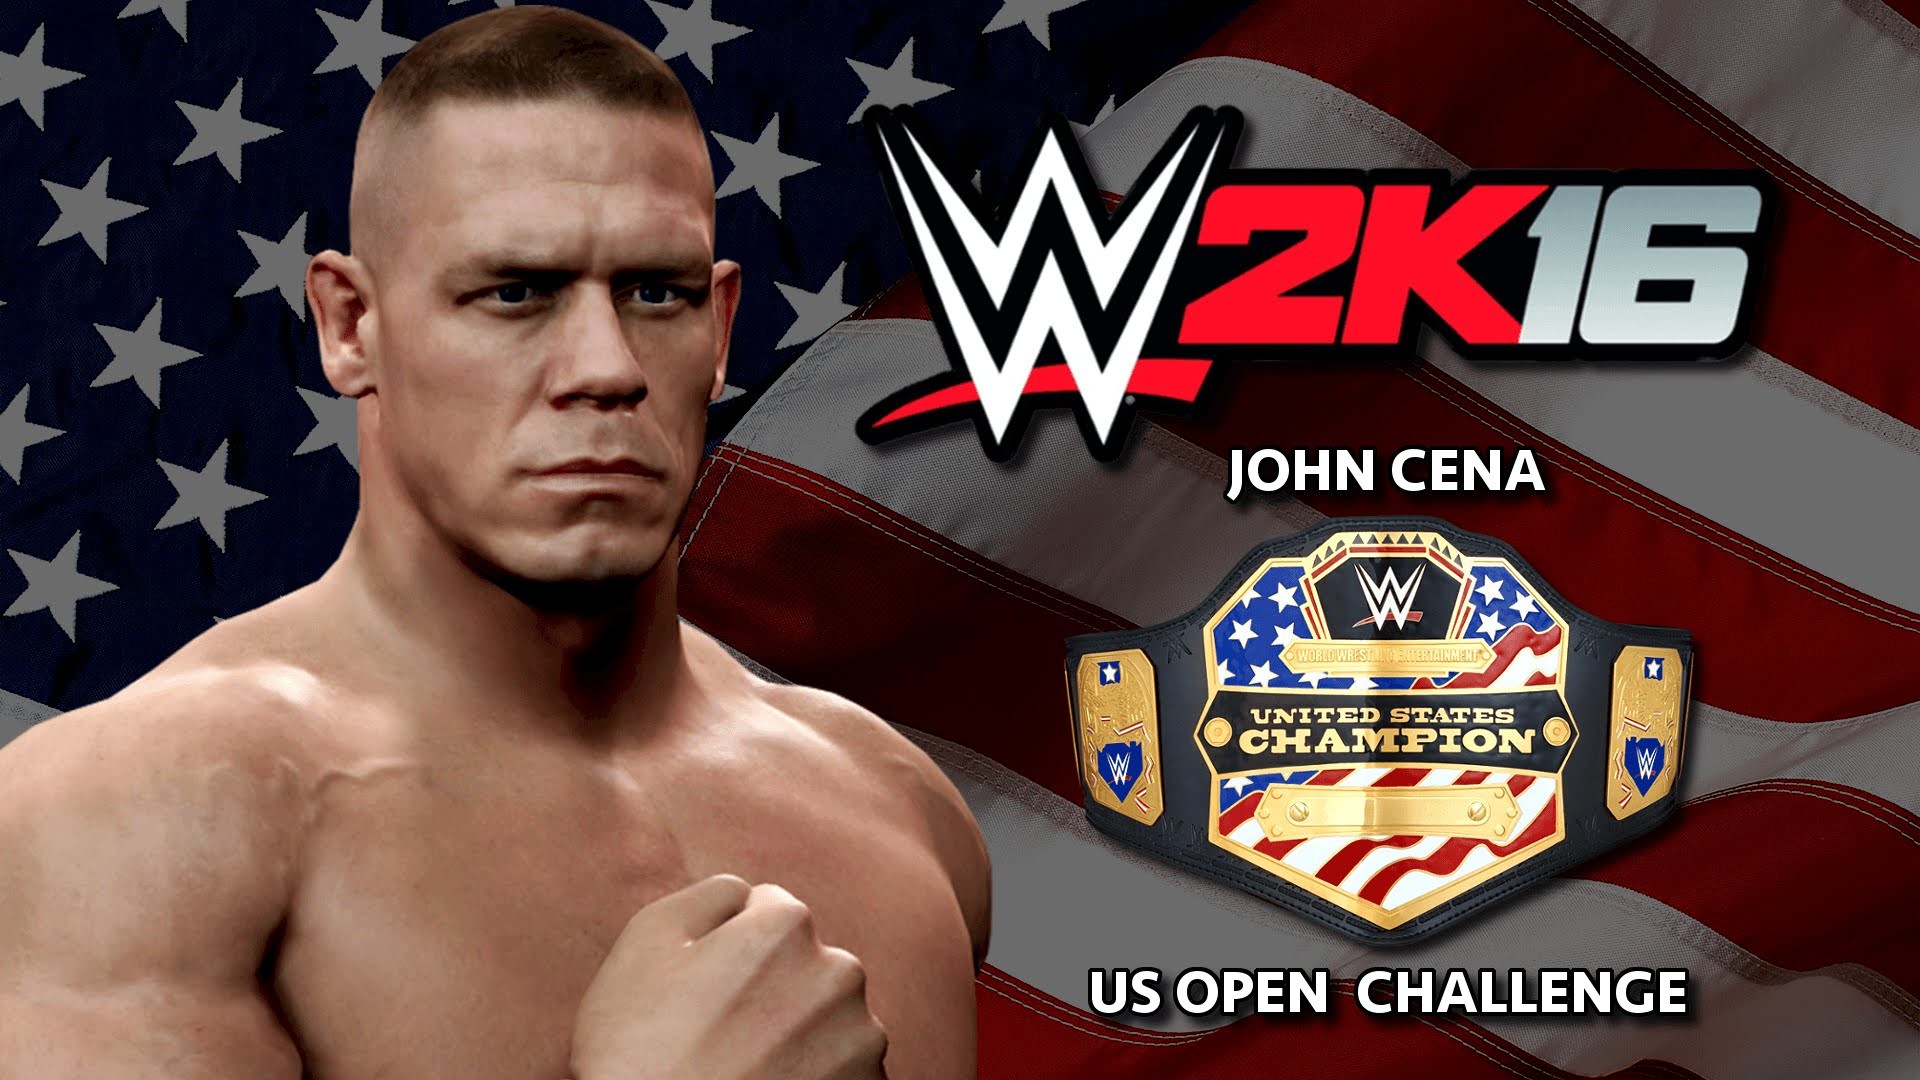 1920x1080 WWE 2K16 John Cena U.S Open Challenge Teaser Trailer (Concept)